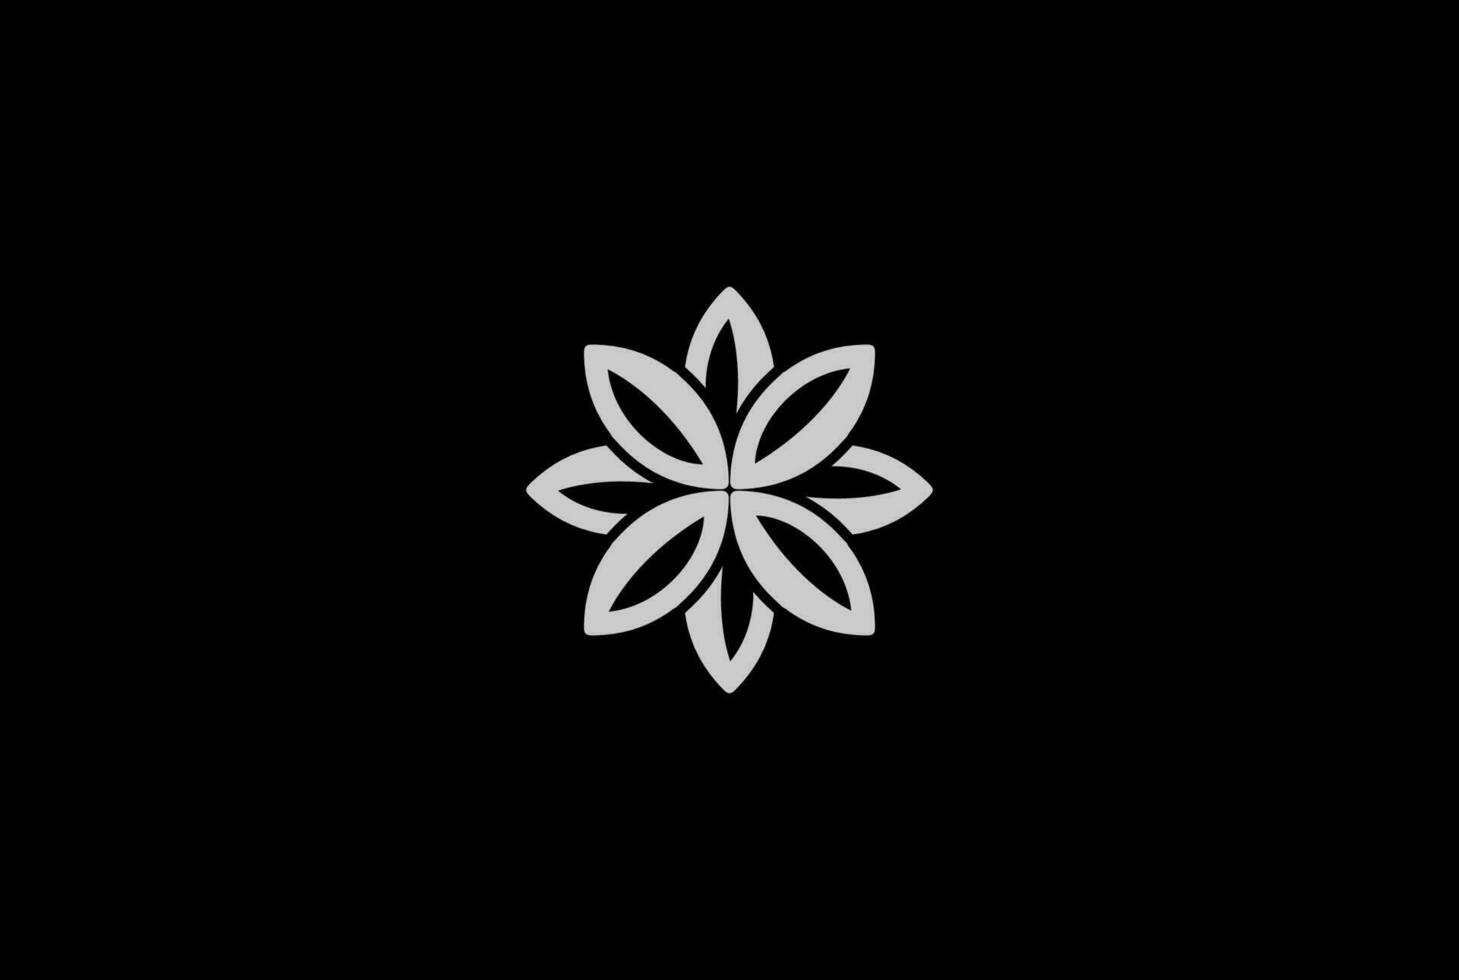 Vetor de design de logotipo de folha de flor geométrica luxuosa elegante